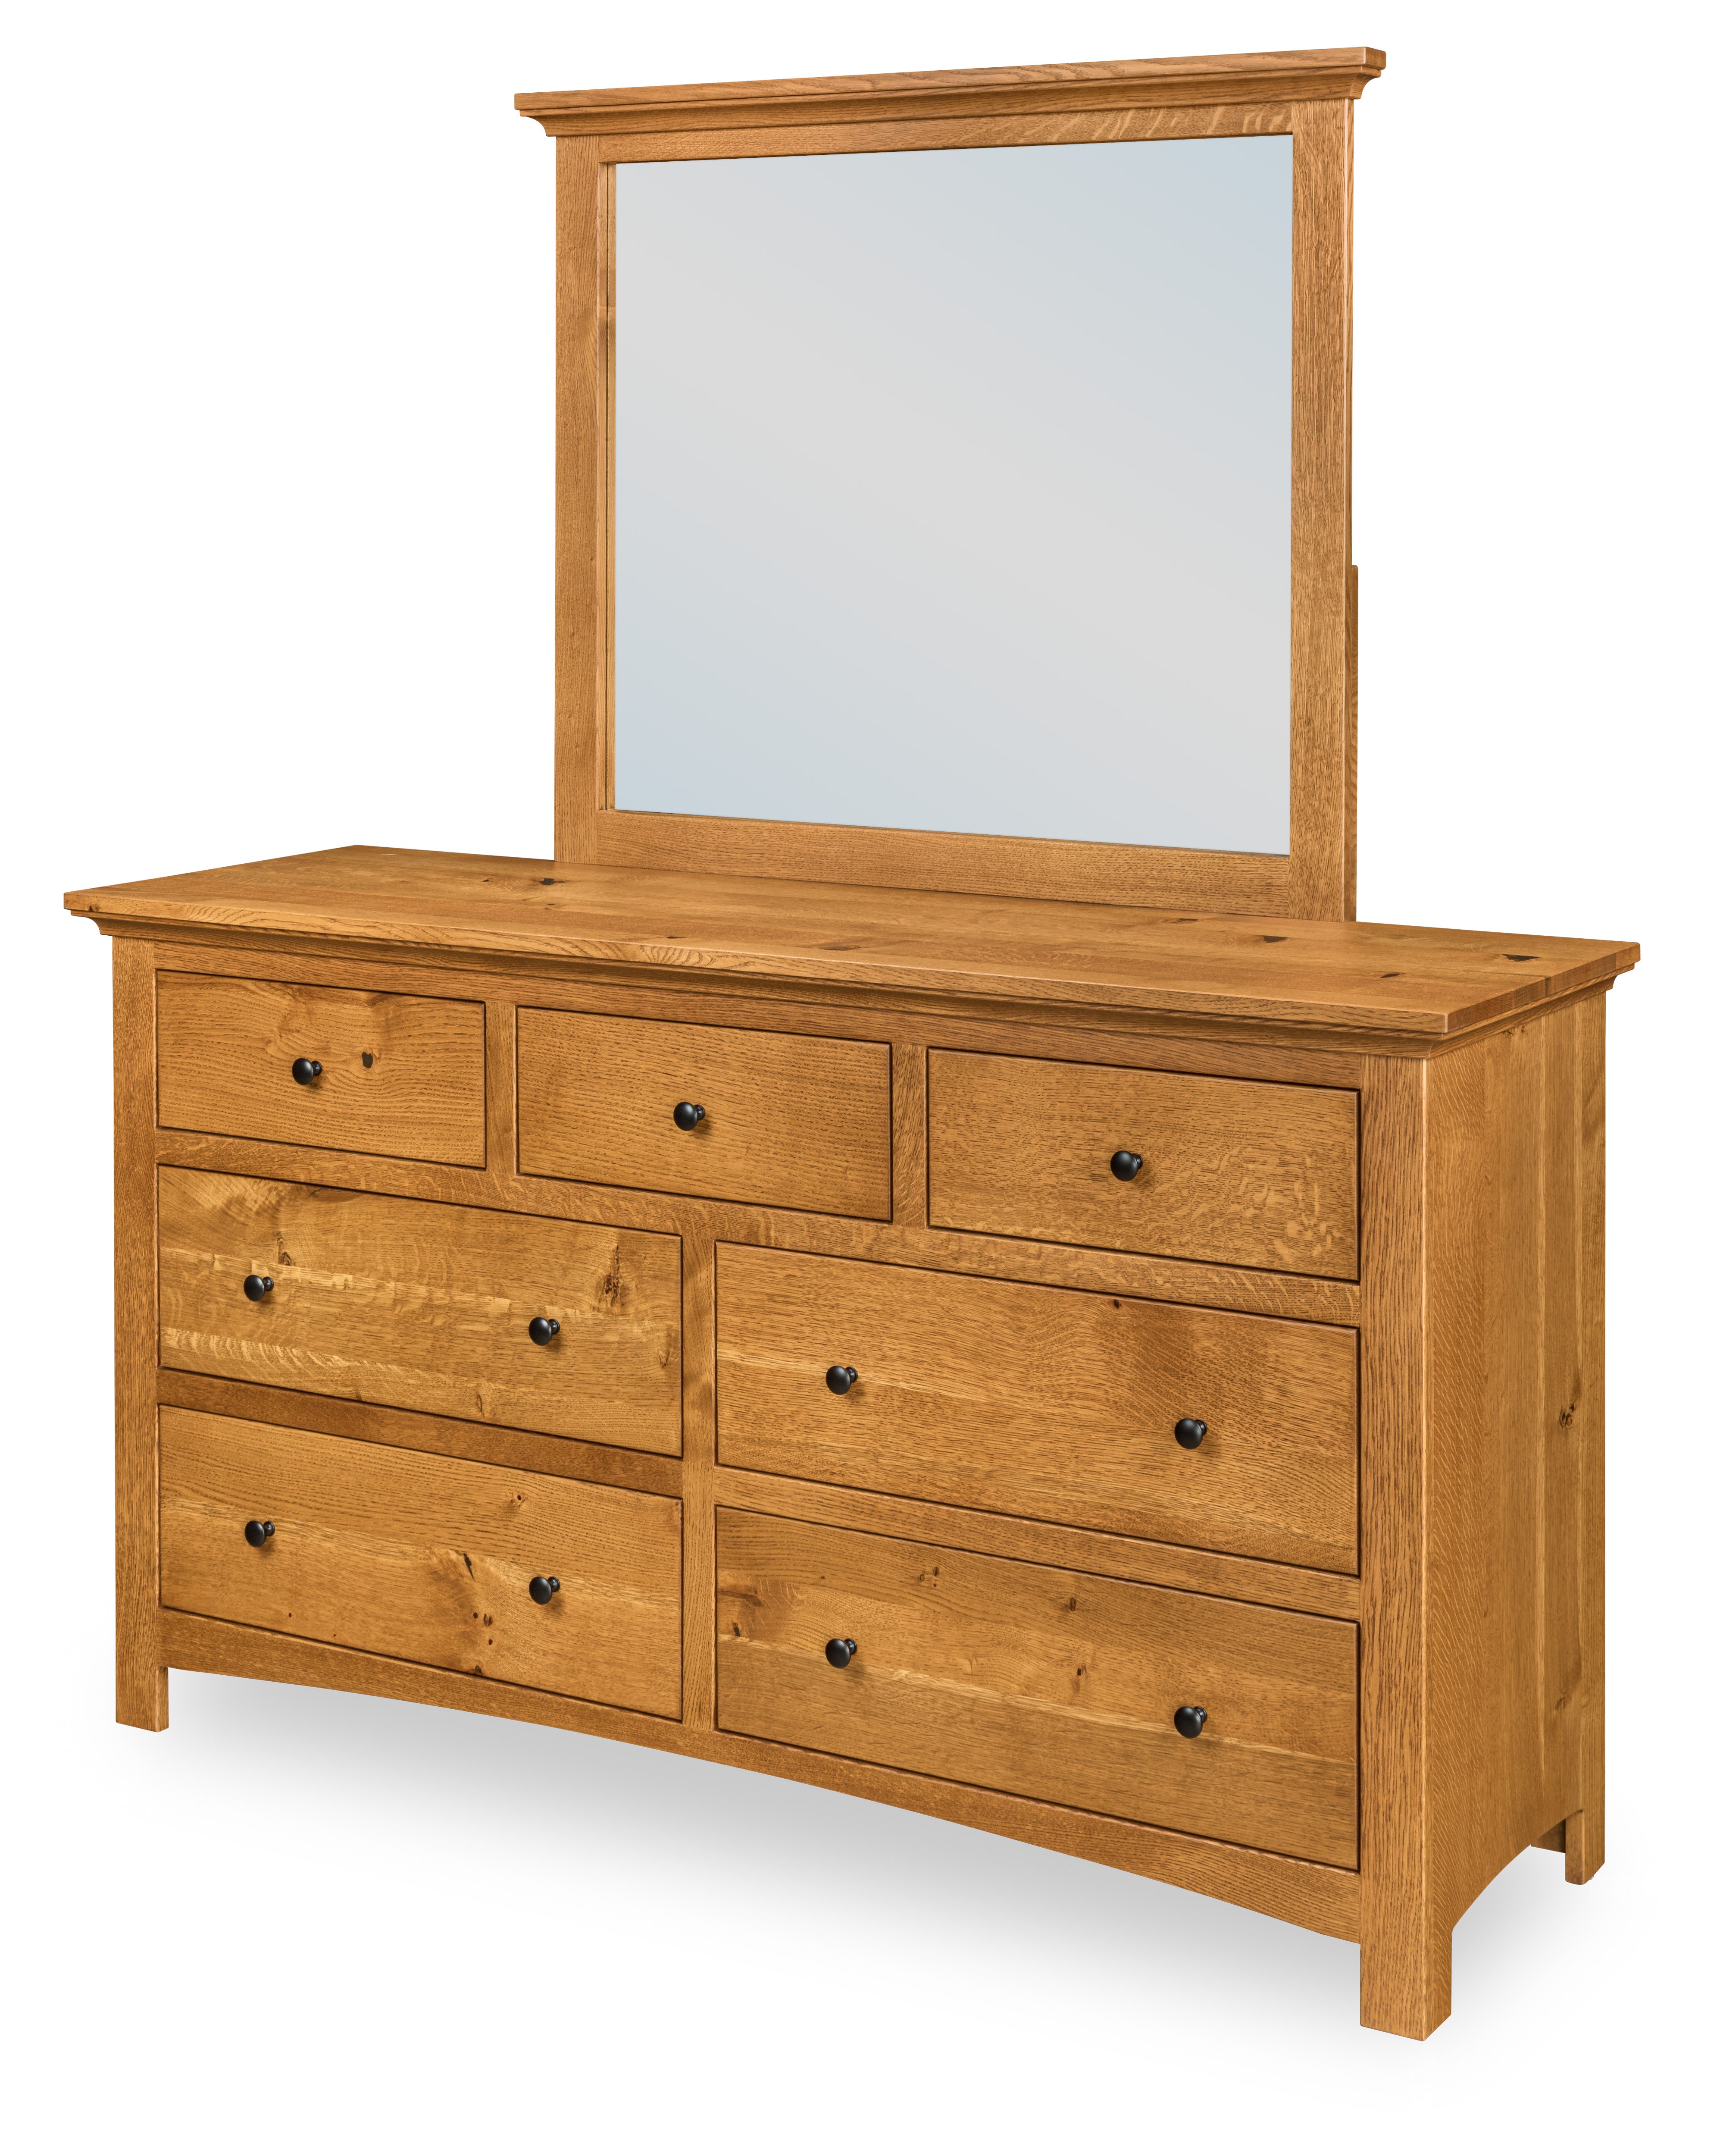 camden dresser in rustic quartersawn wood with medium walnut stain